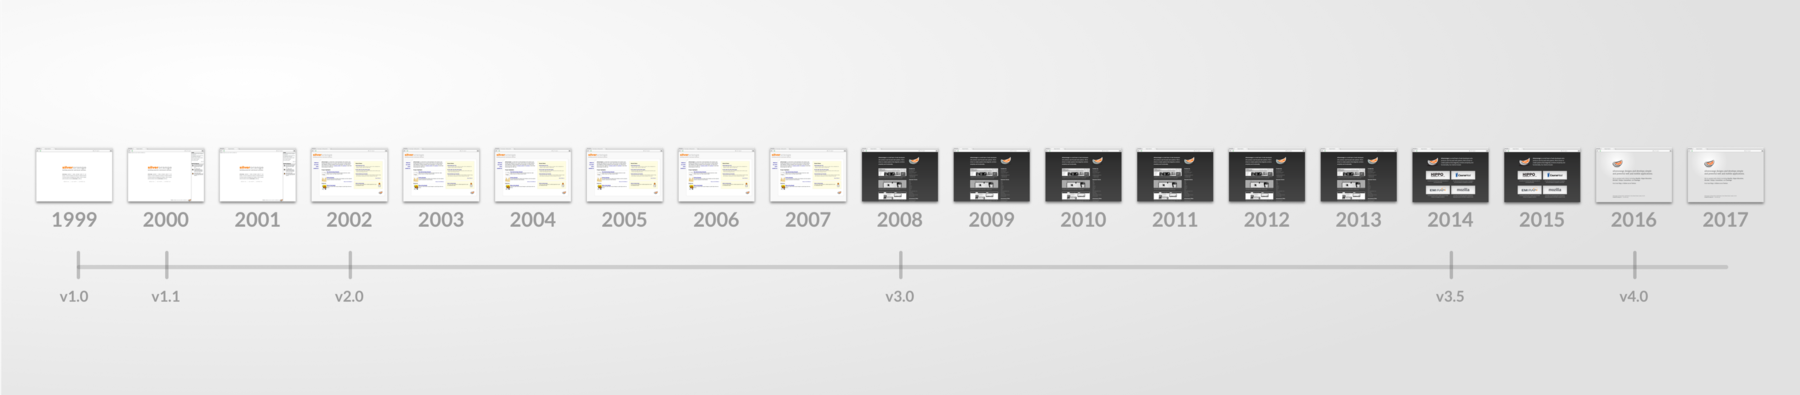 Timeline of silverorange.com website screenshots from 1999 to 2017